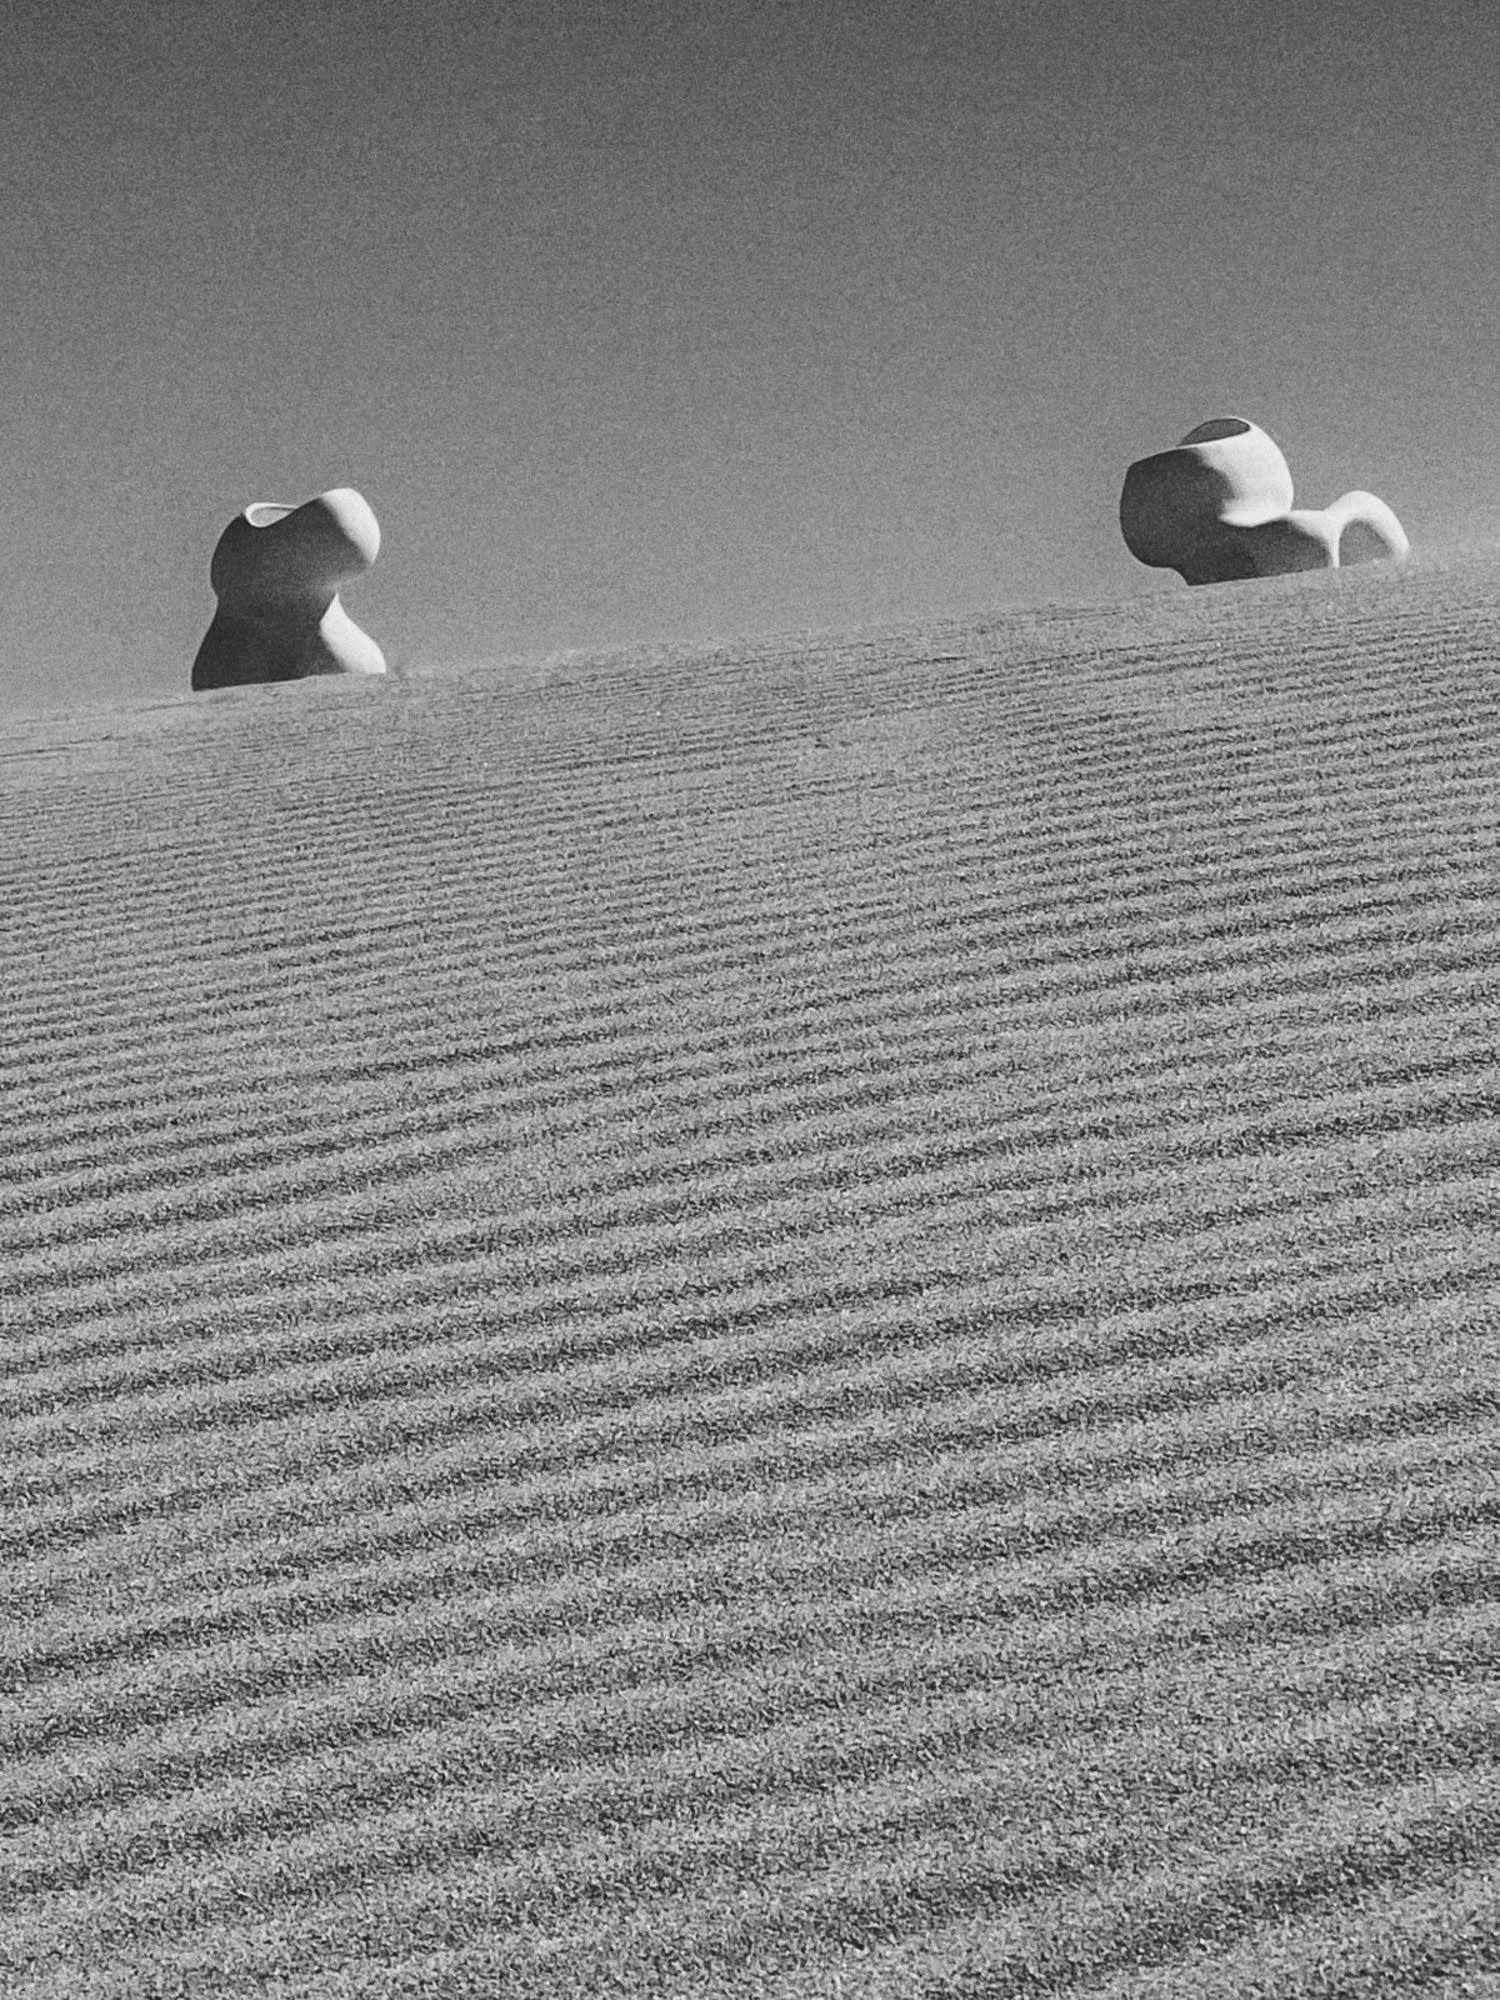 The sculptures sitting on Uruguayan desert.